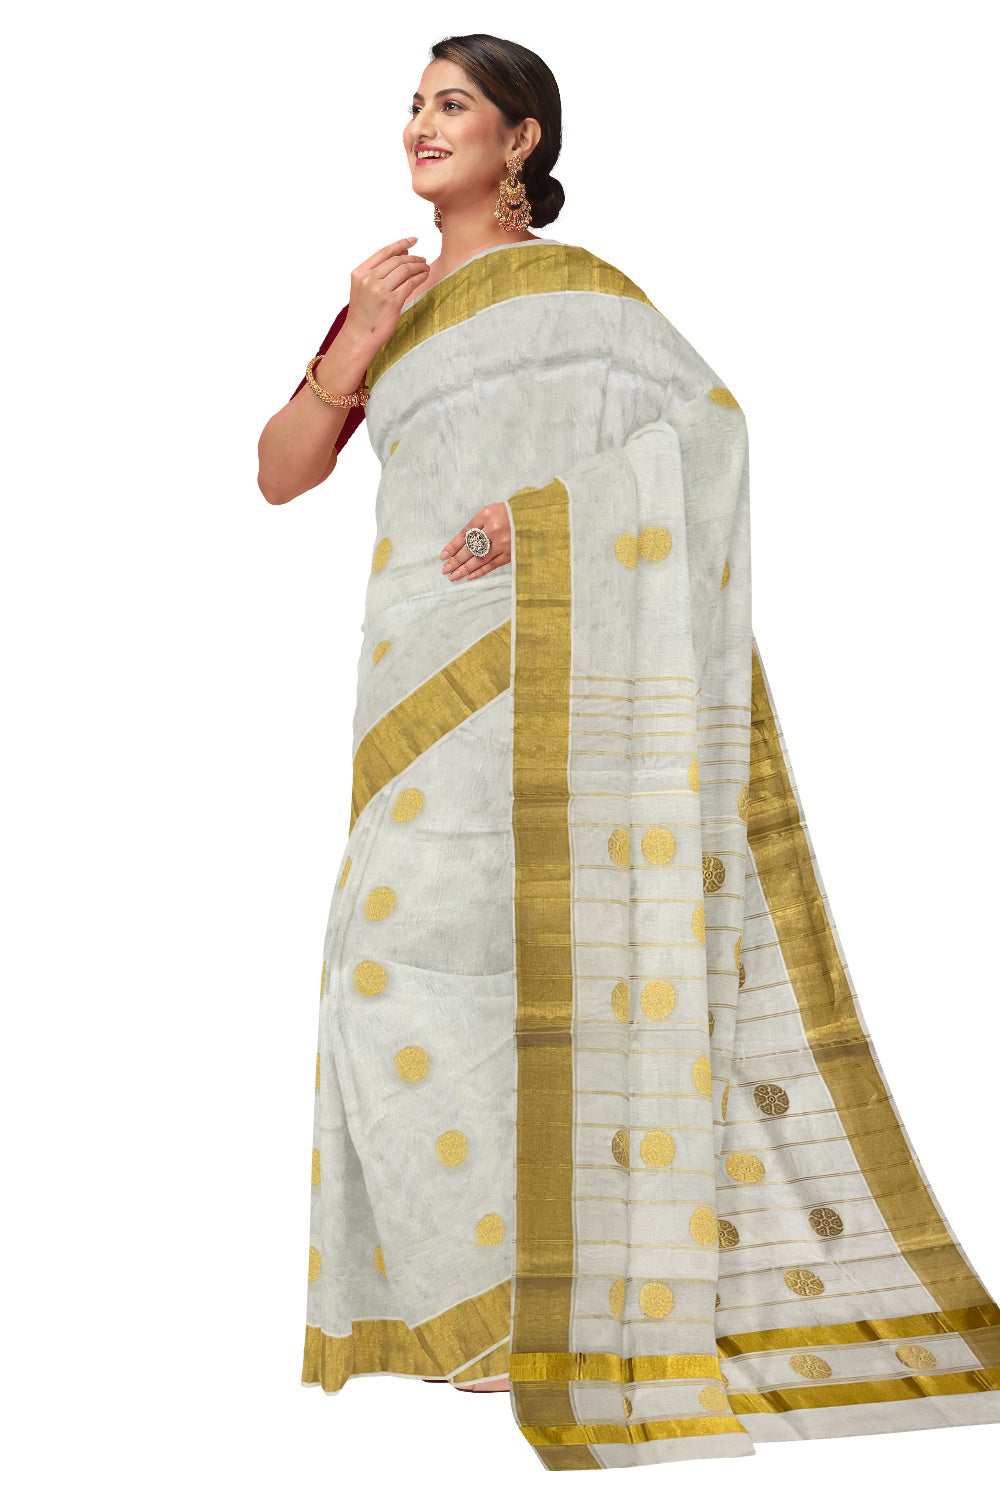 Southloom Premium Handloom Cotton Kasavu Saree with Heavy Woven Works